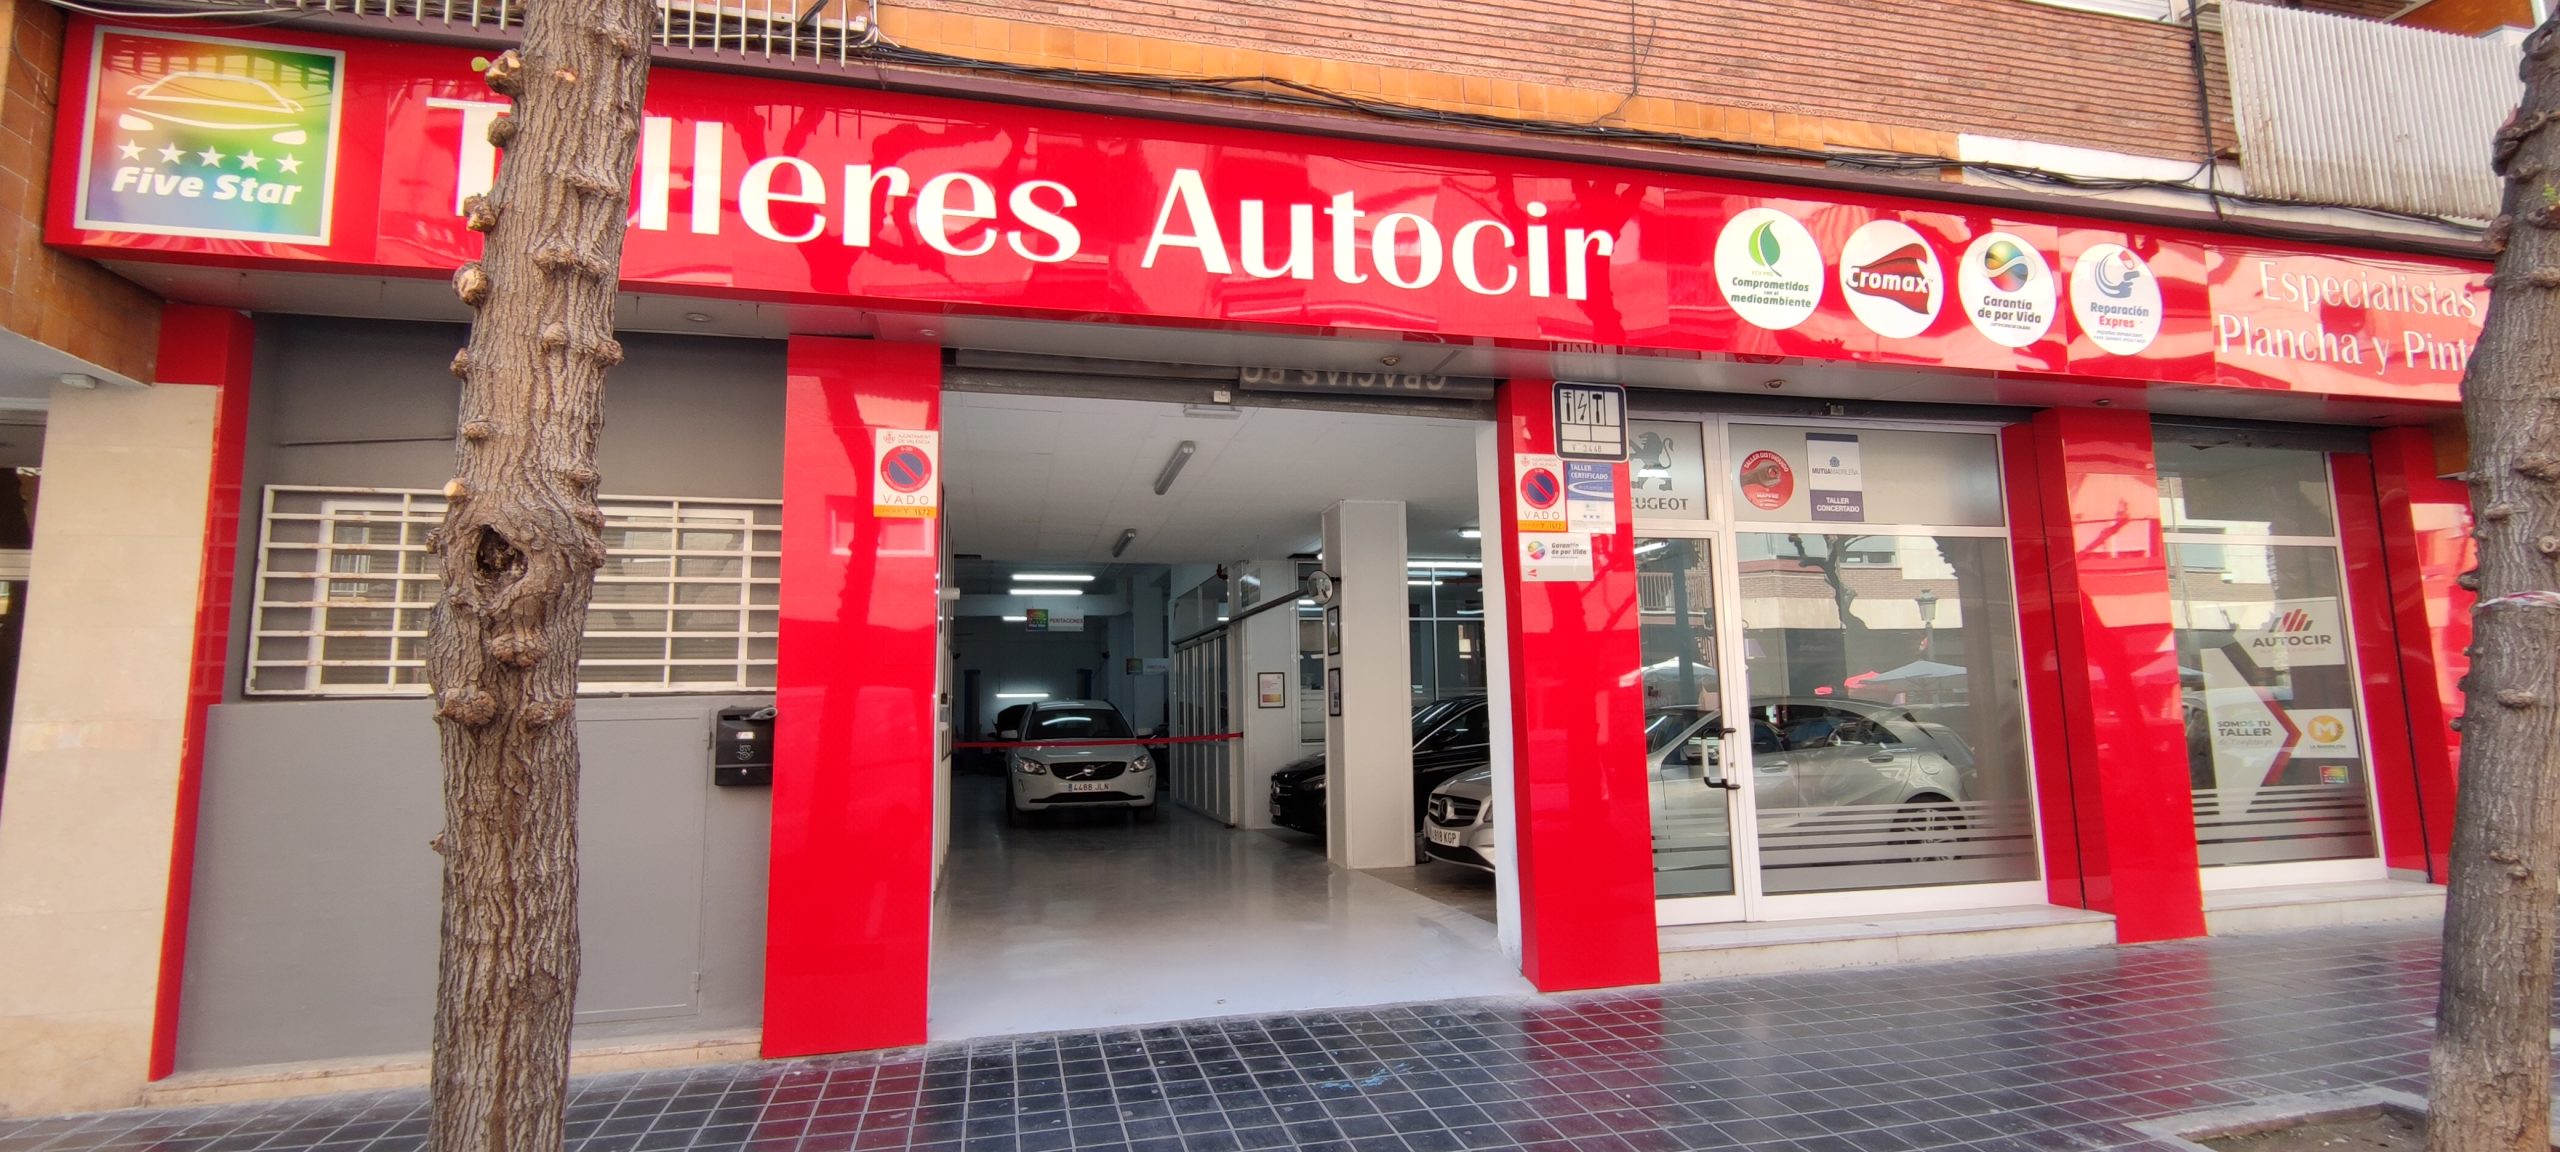 Exterior talleres Autocir nueva ubicación en Valencia